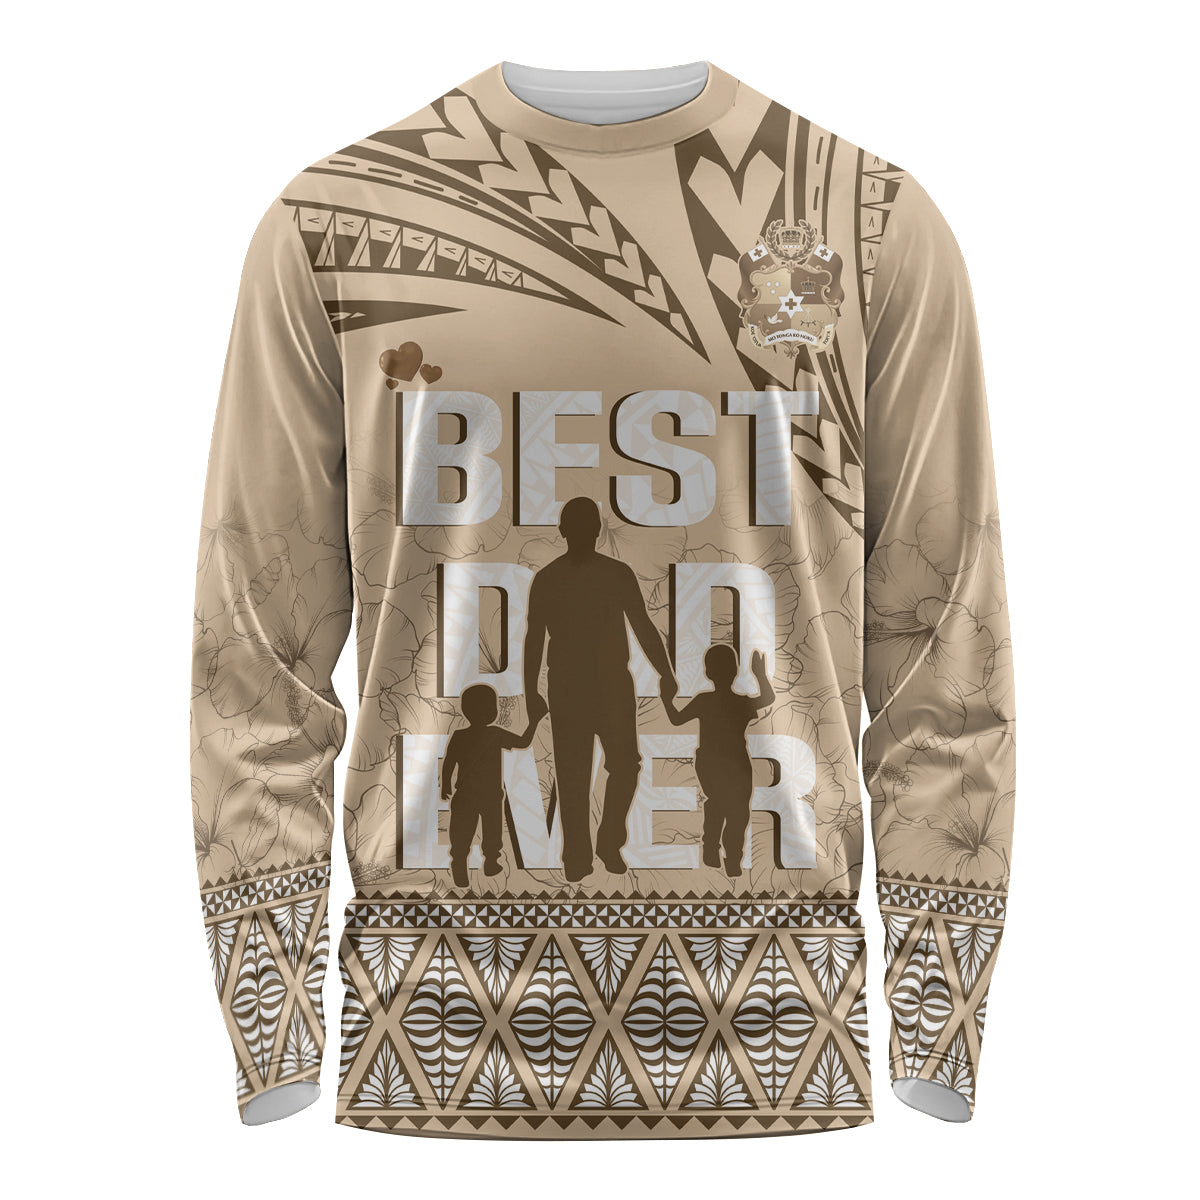 Tonga Father's Day Long Sleeve Shirt Best Dad Ever Tongan Ngatu Pattern - Beige